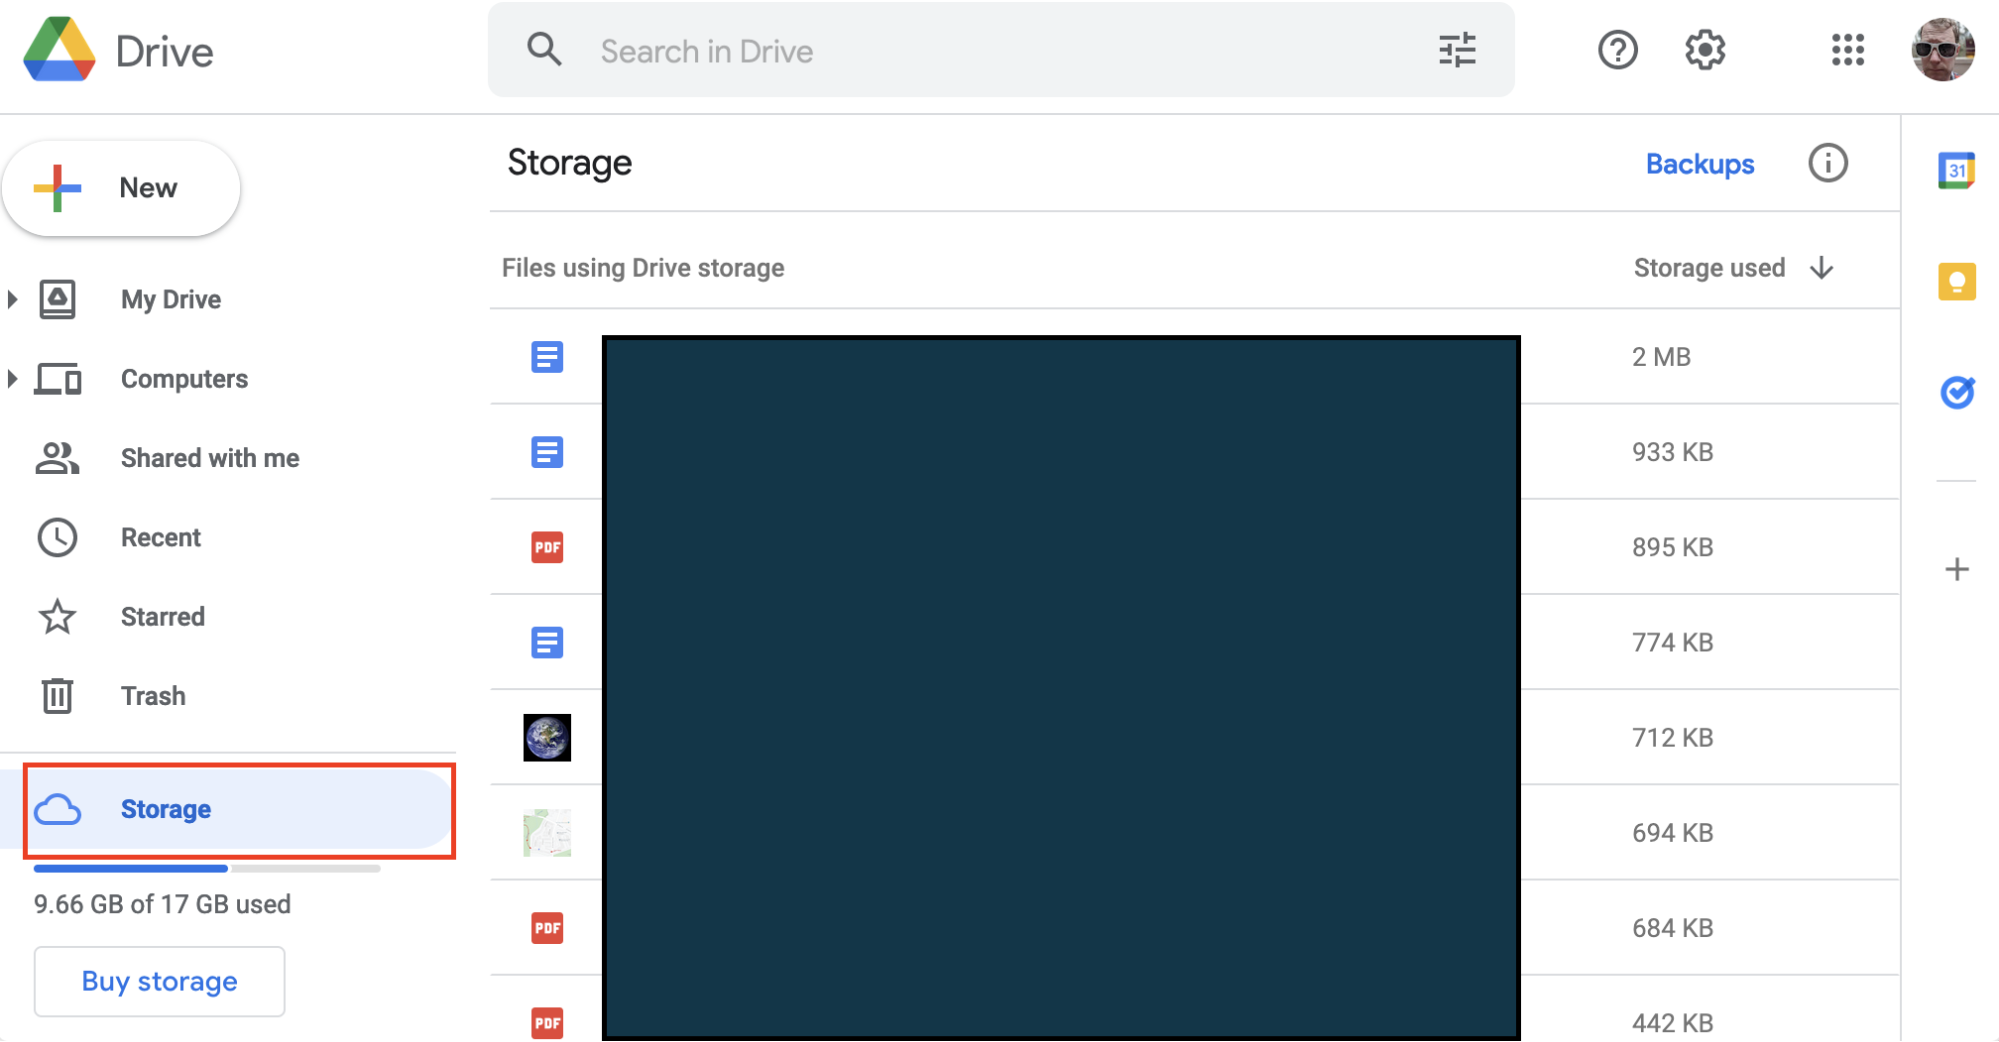 Buy Gmail Login Edu Email Address - Unlimited Google Drive Storage